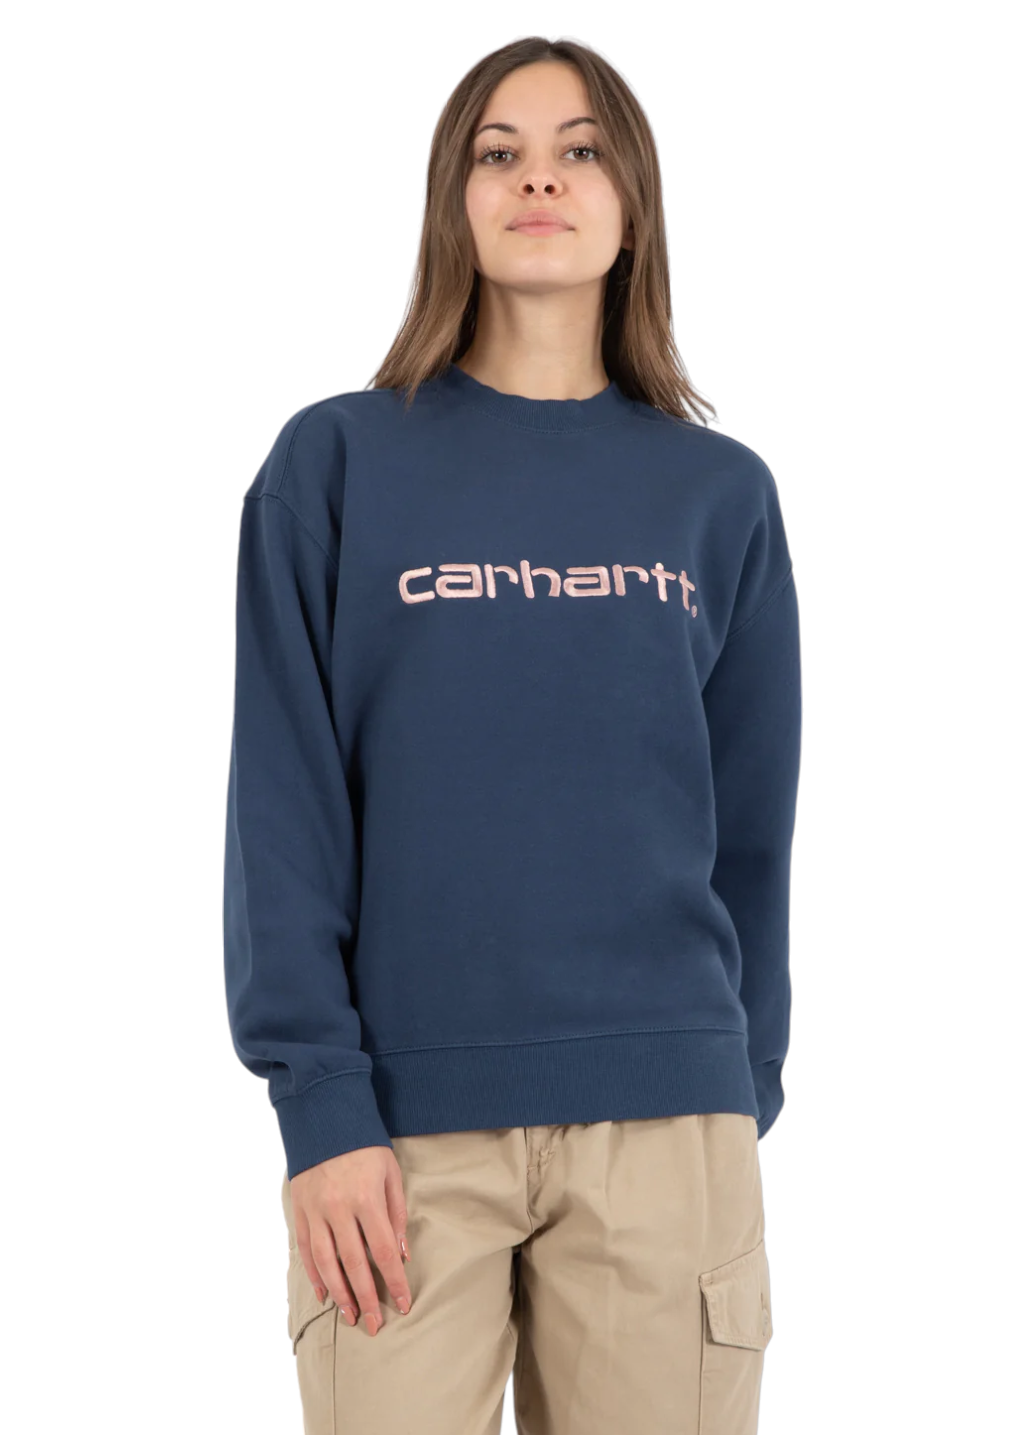 Carhartt WIP - W' Carhartt Sweatshirt - Squid/Glassy Pink - Hardpressed Print Studio Inc.